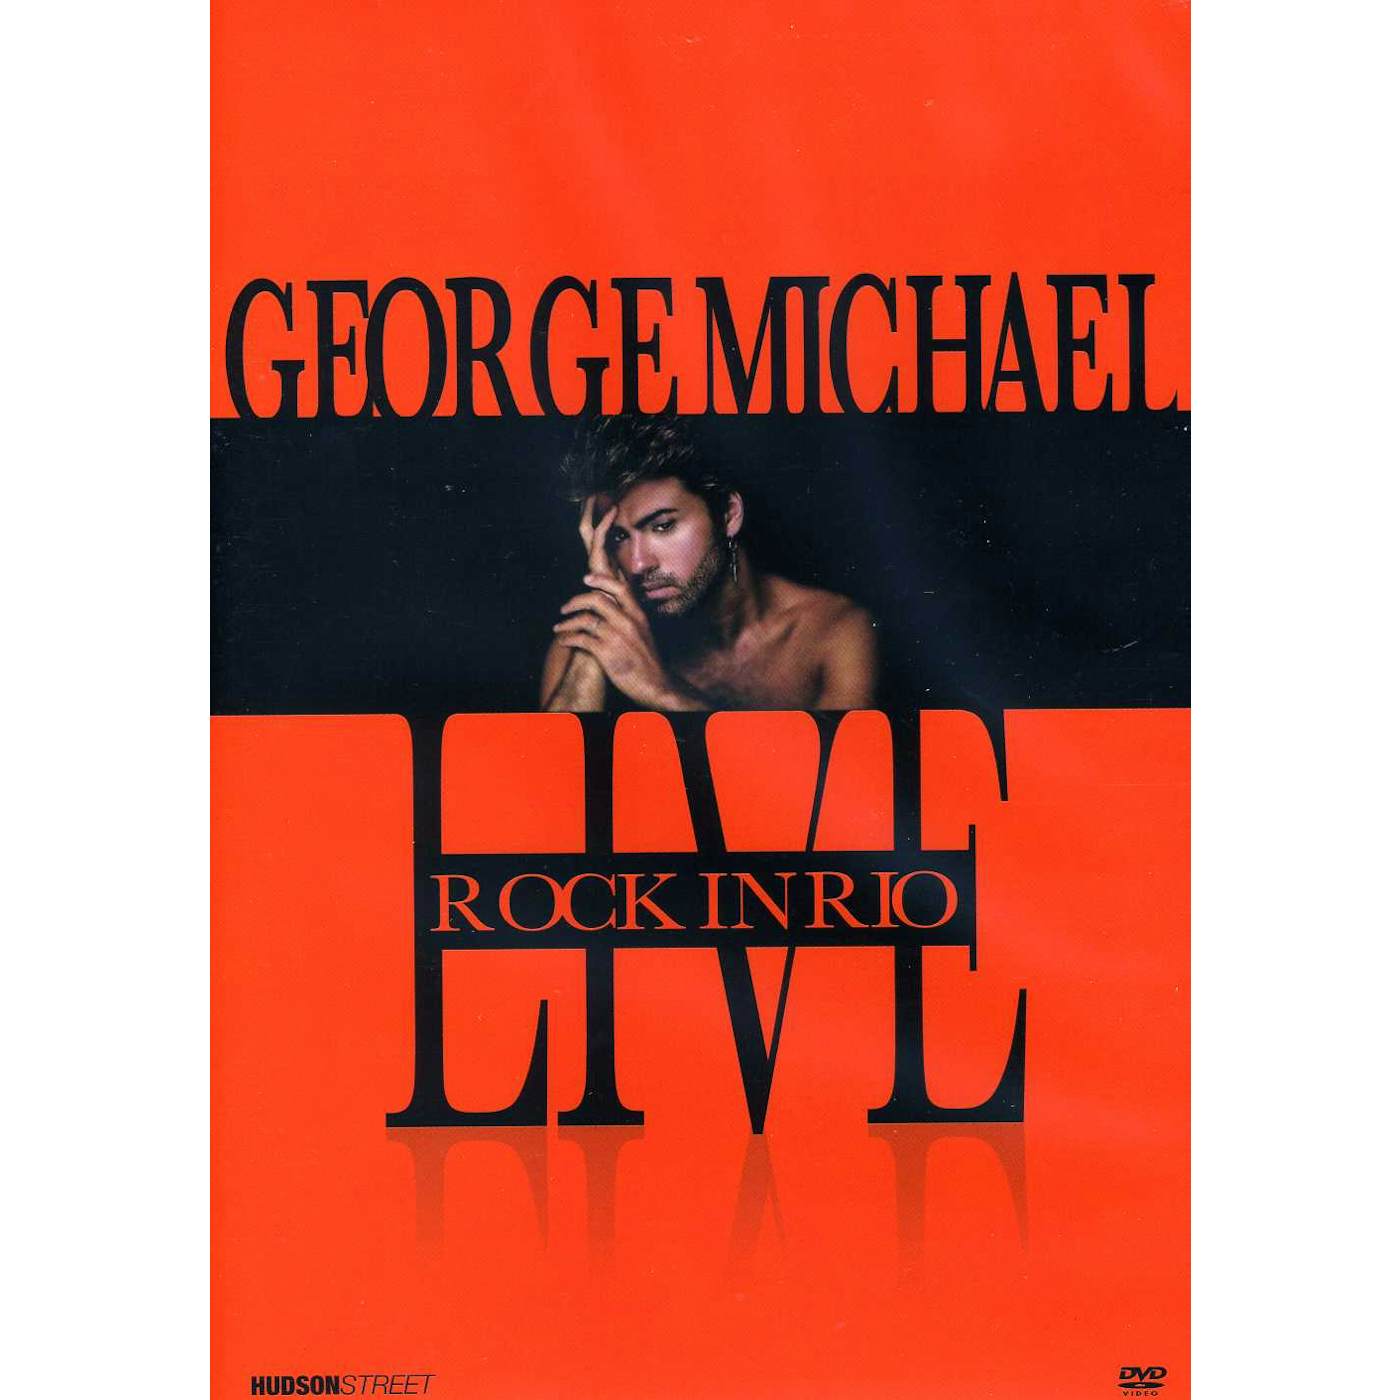 George Michael LIVE: ROCK IN RIO DVD